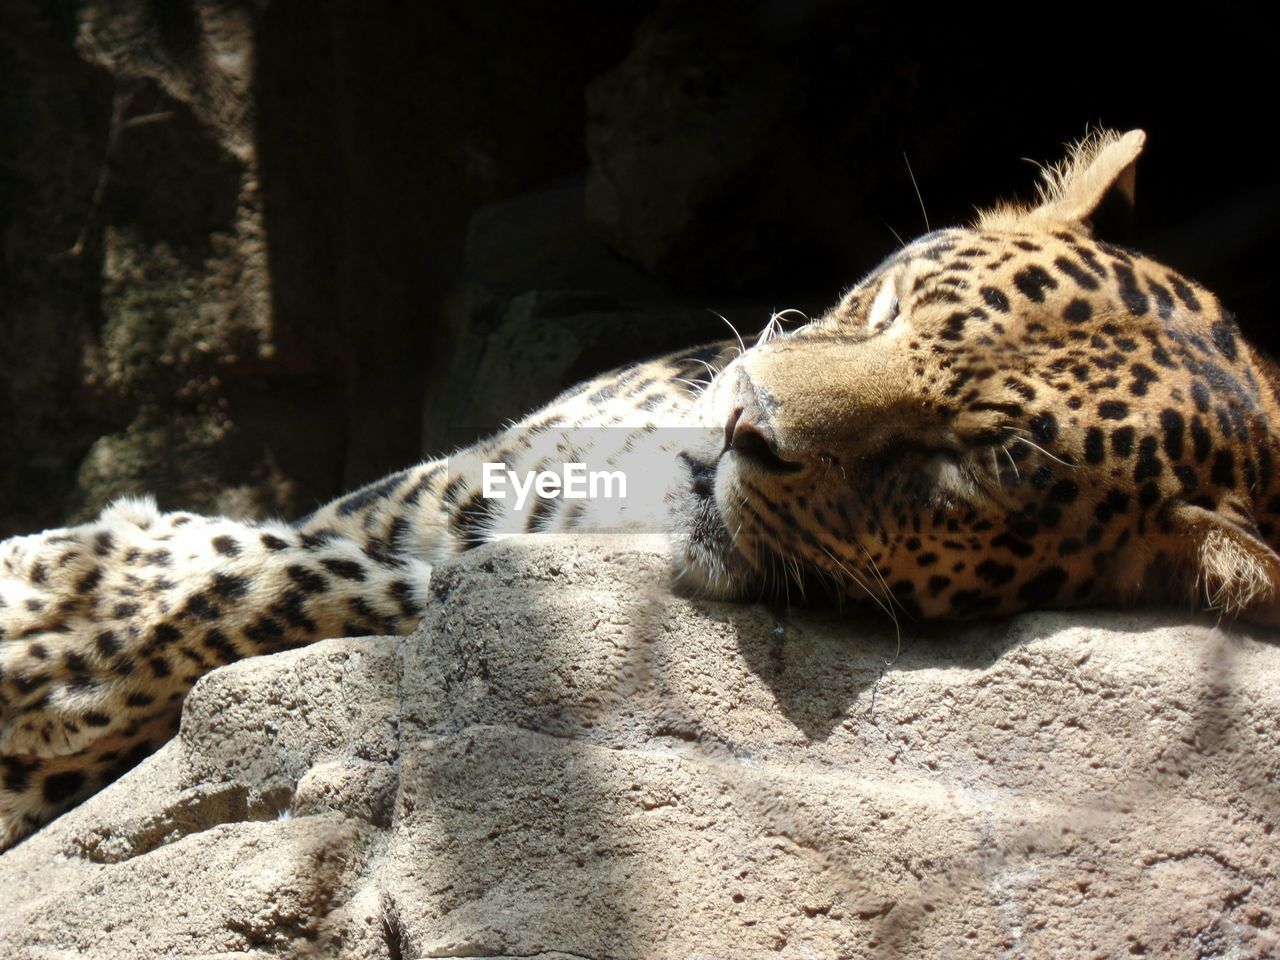 Cheetah sleeping on stone